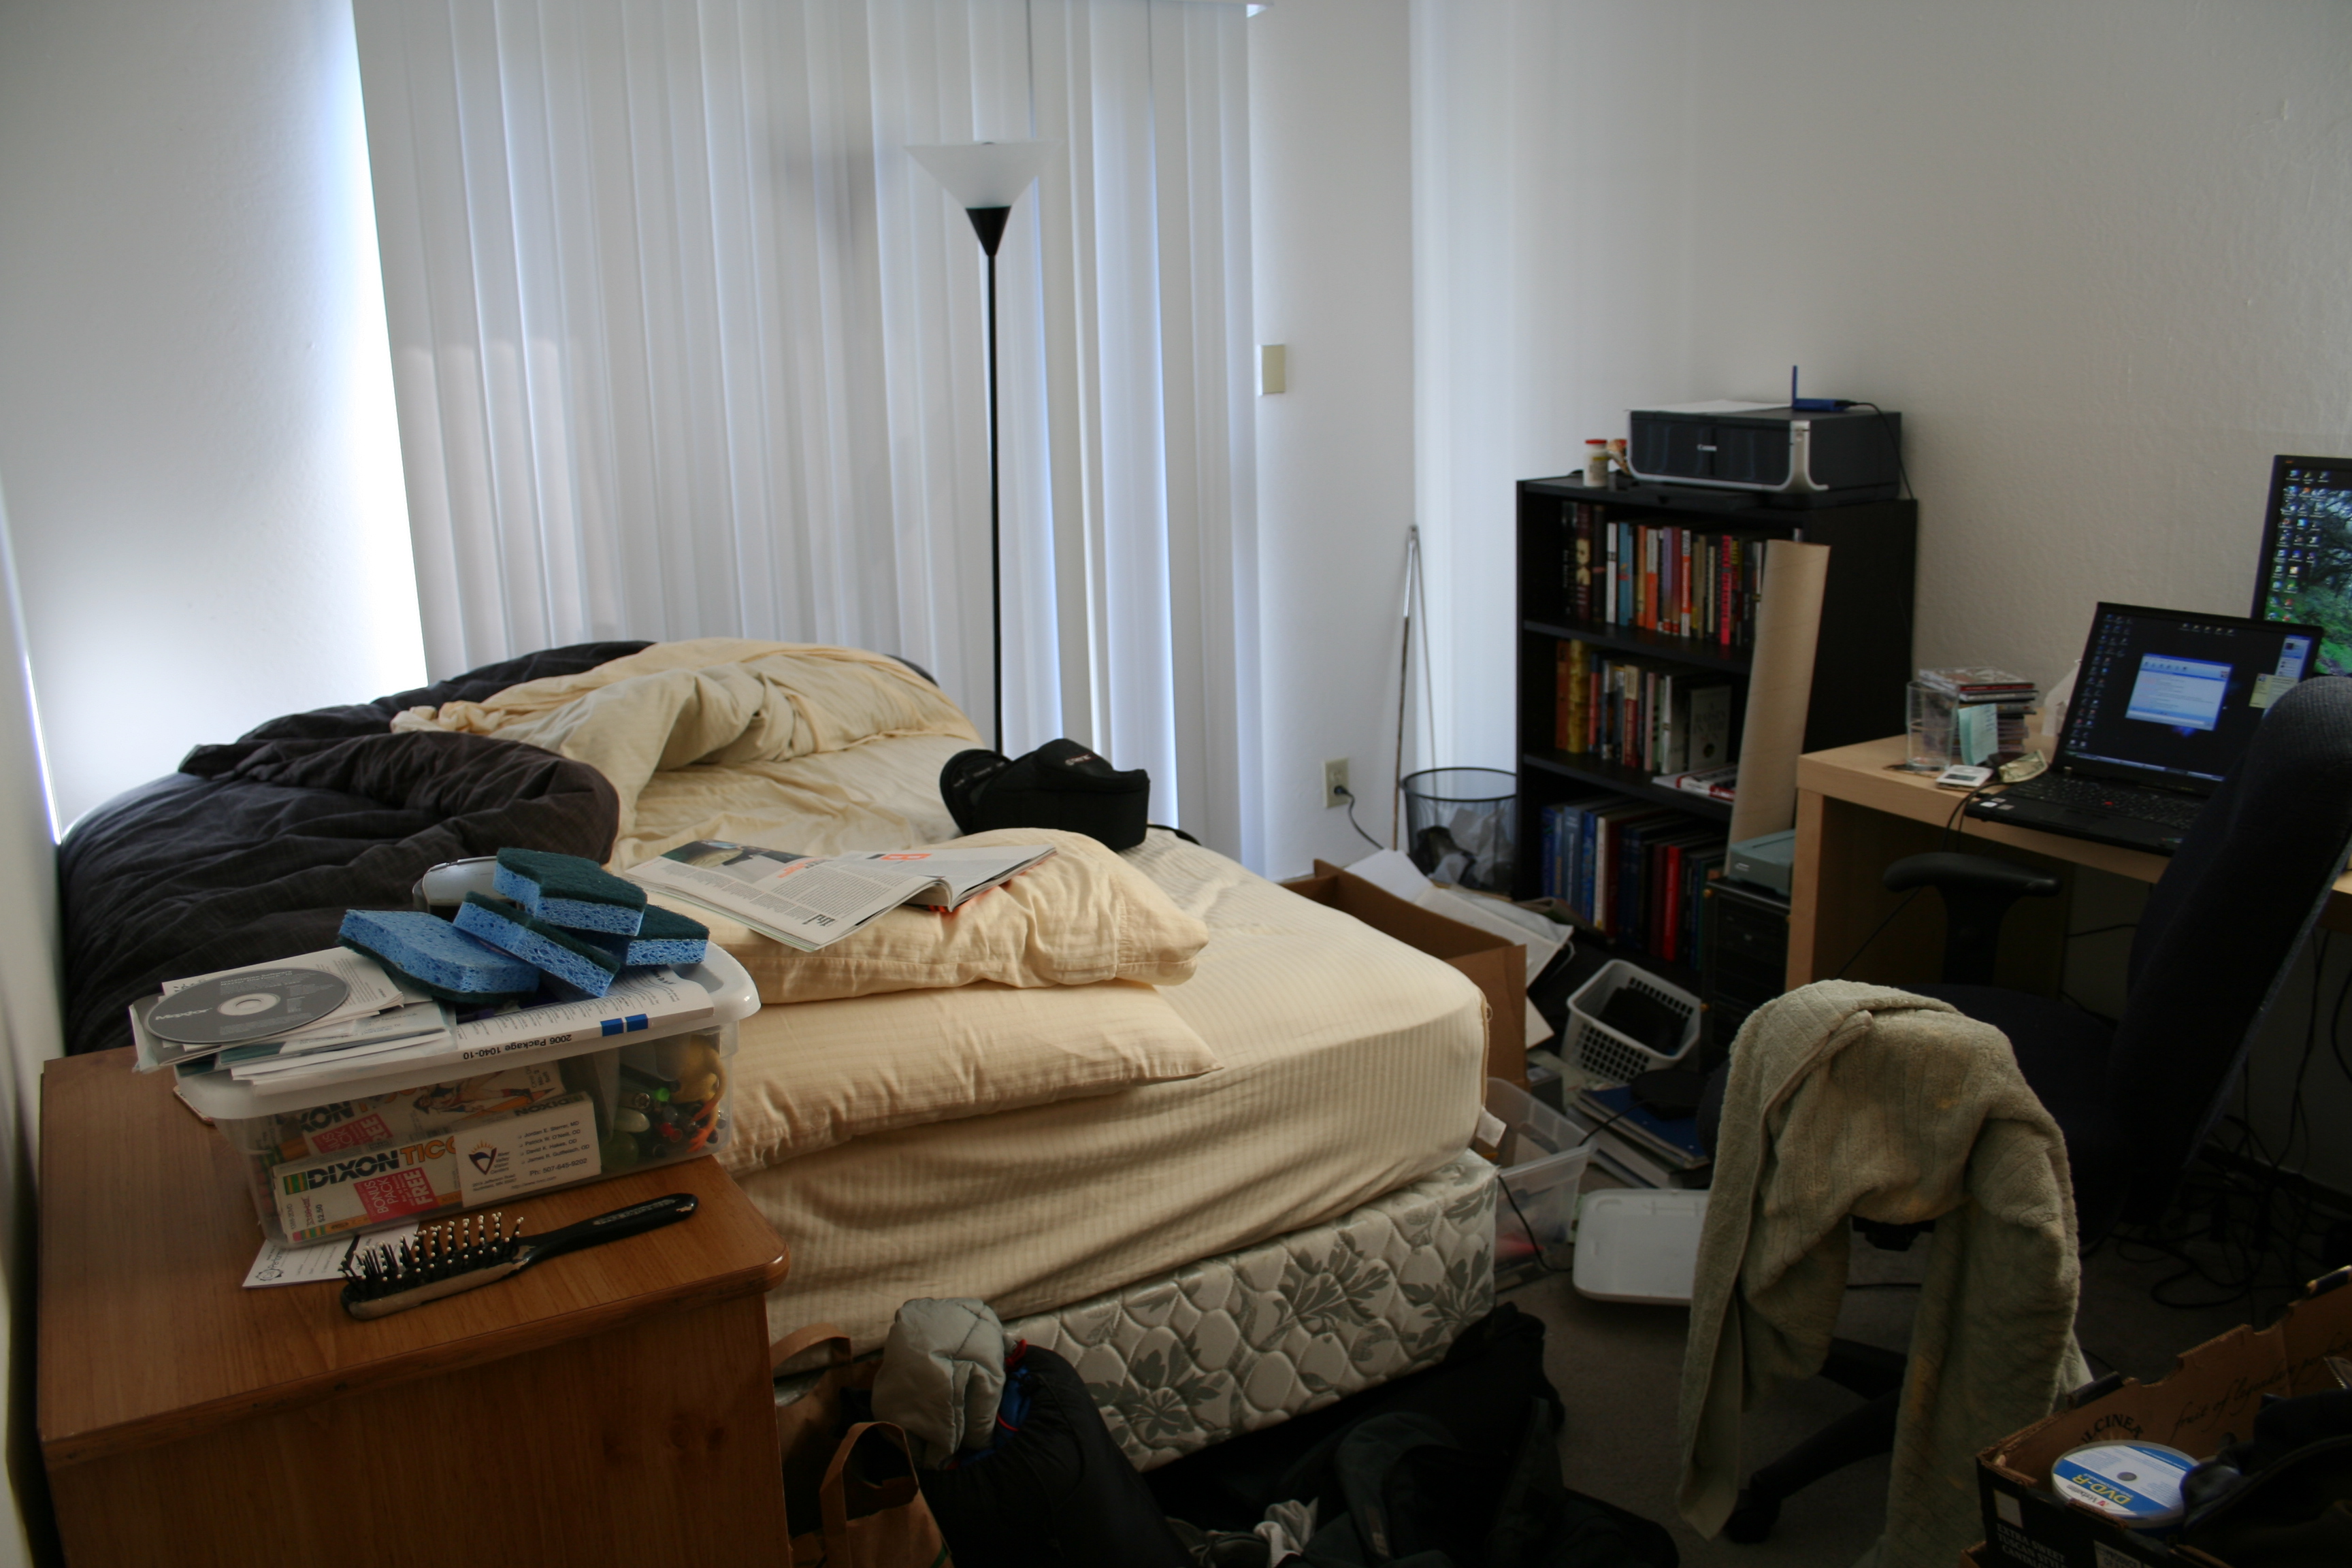 Messy bedroom by ImipolexG, via Flickr | Messy bedroom, Furniture ...